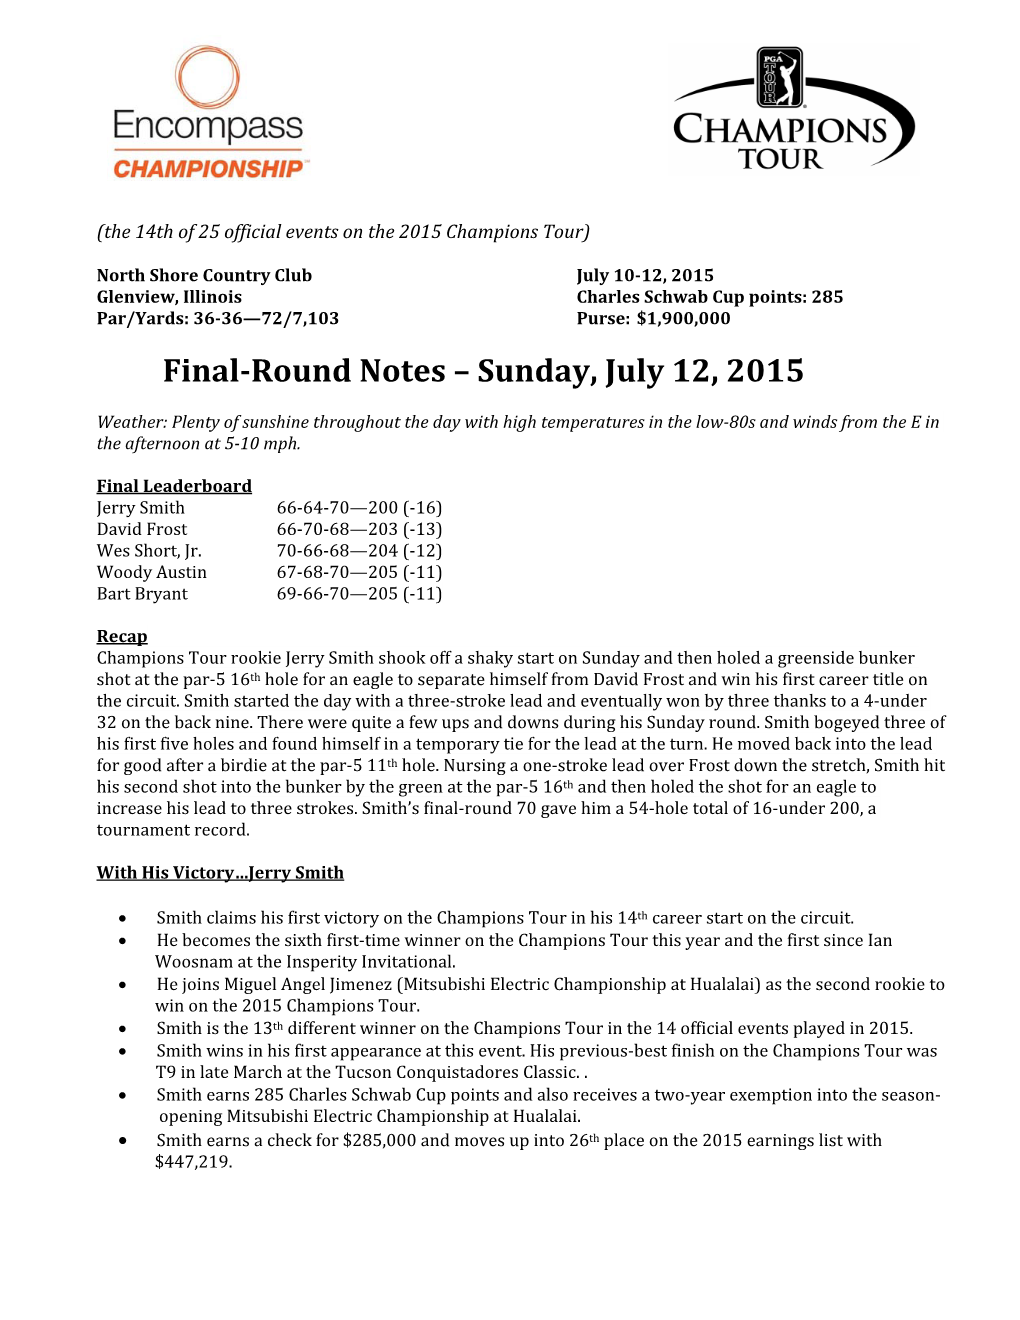 Final-Round Notes – Sunday, July 12, 2015